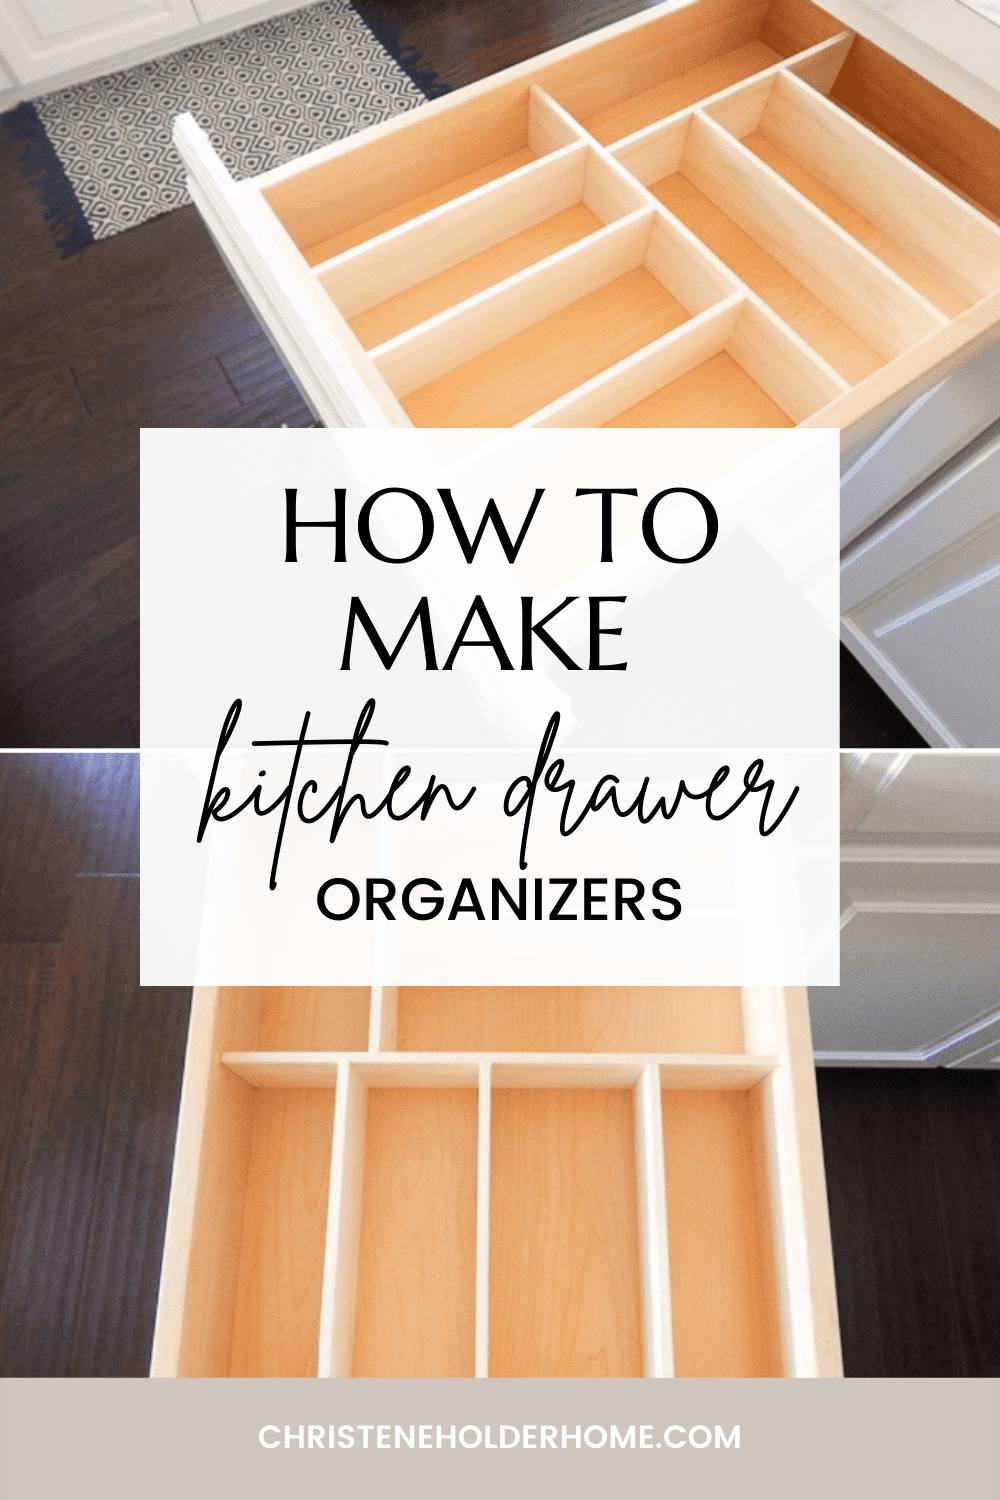 Custom-fit Drawer Organizers